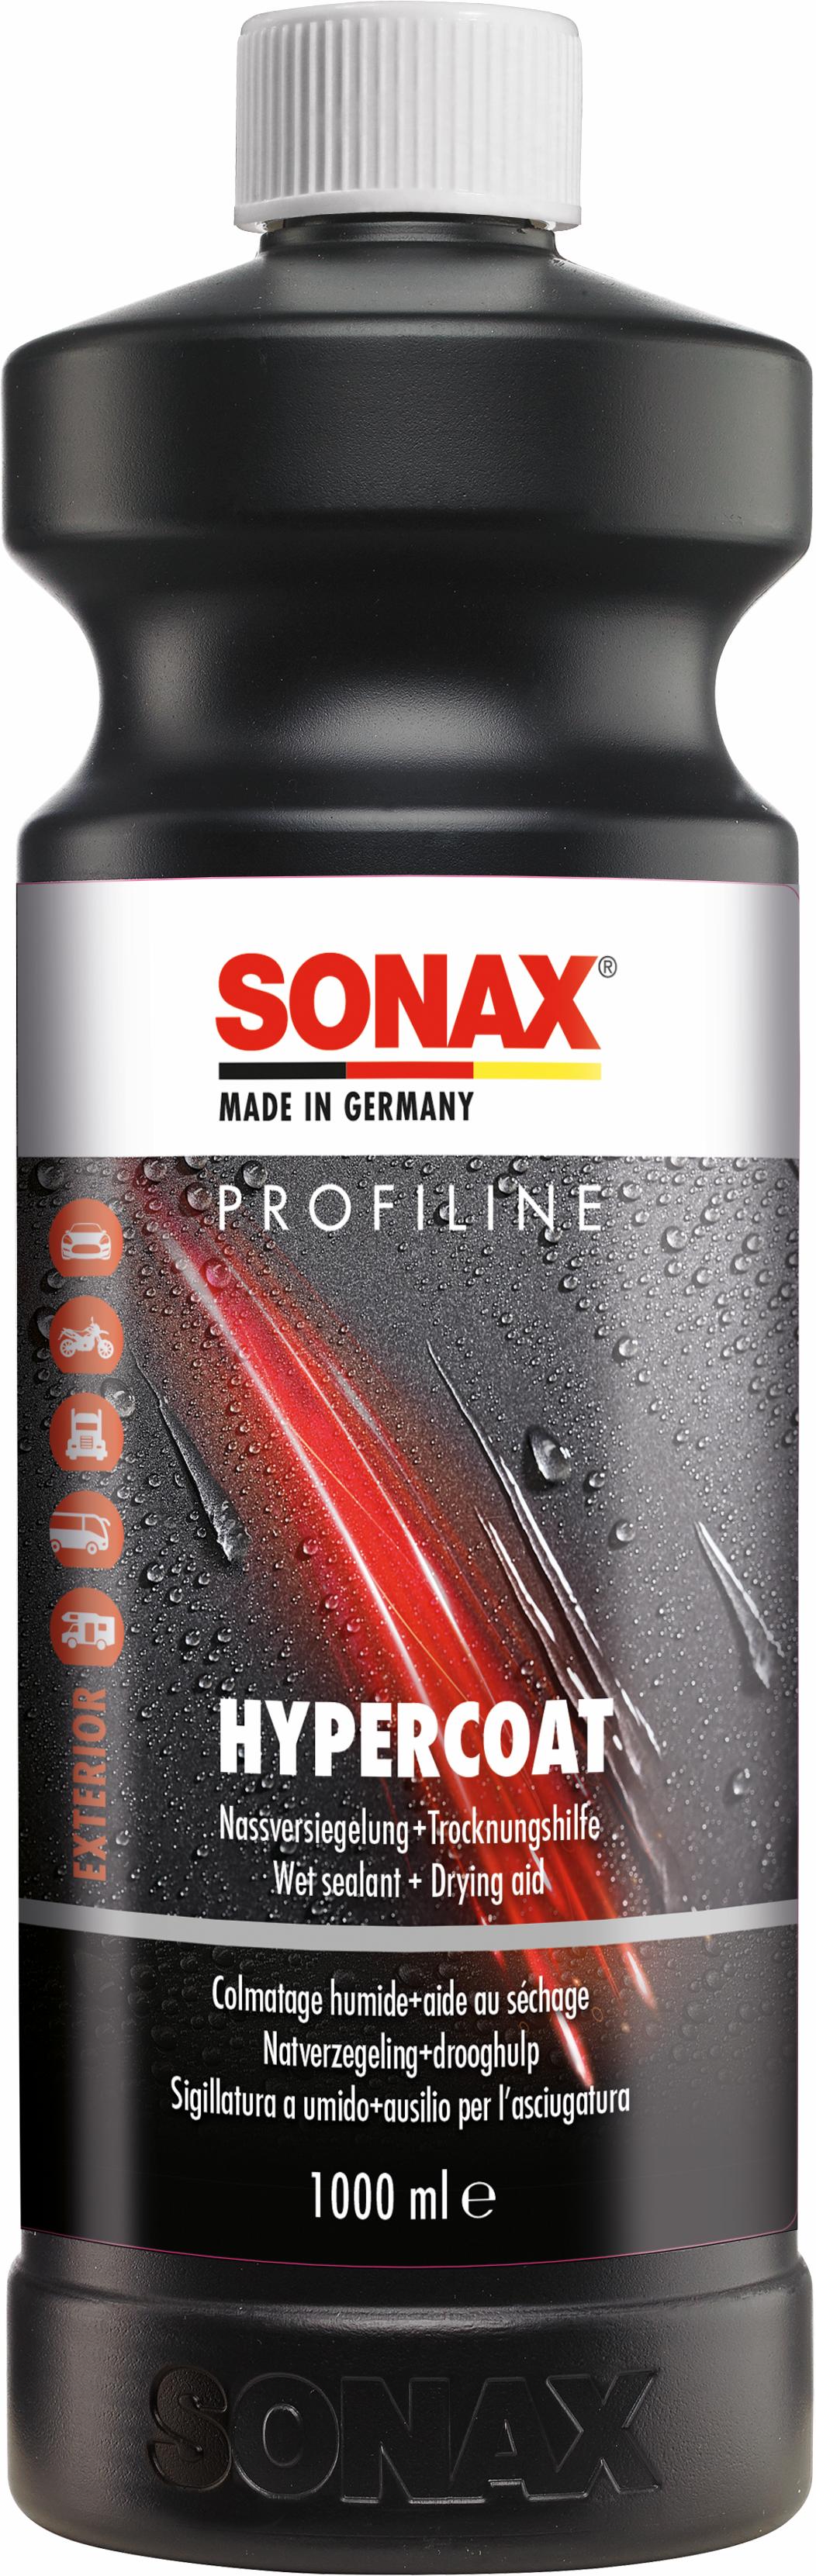 SONAX Profiline Hypercoat - 1L